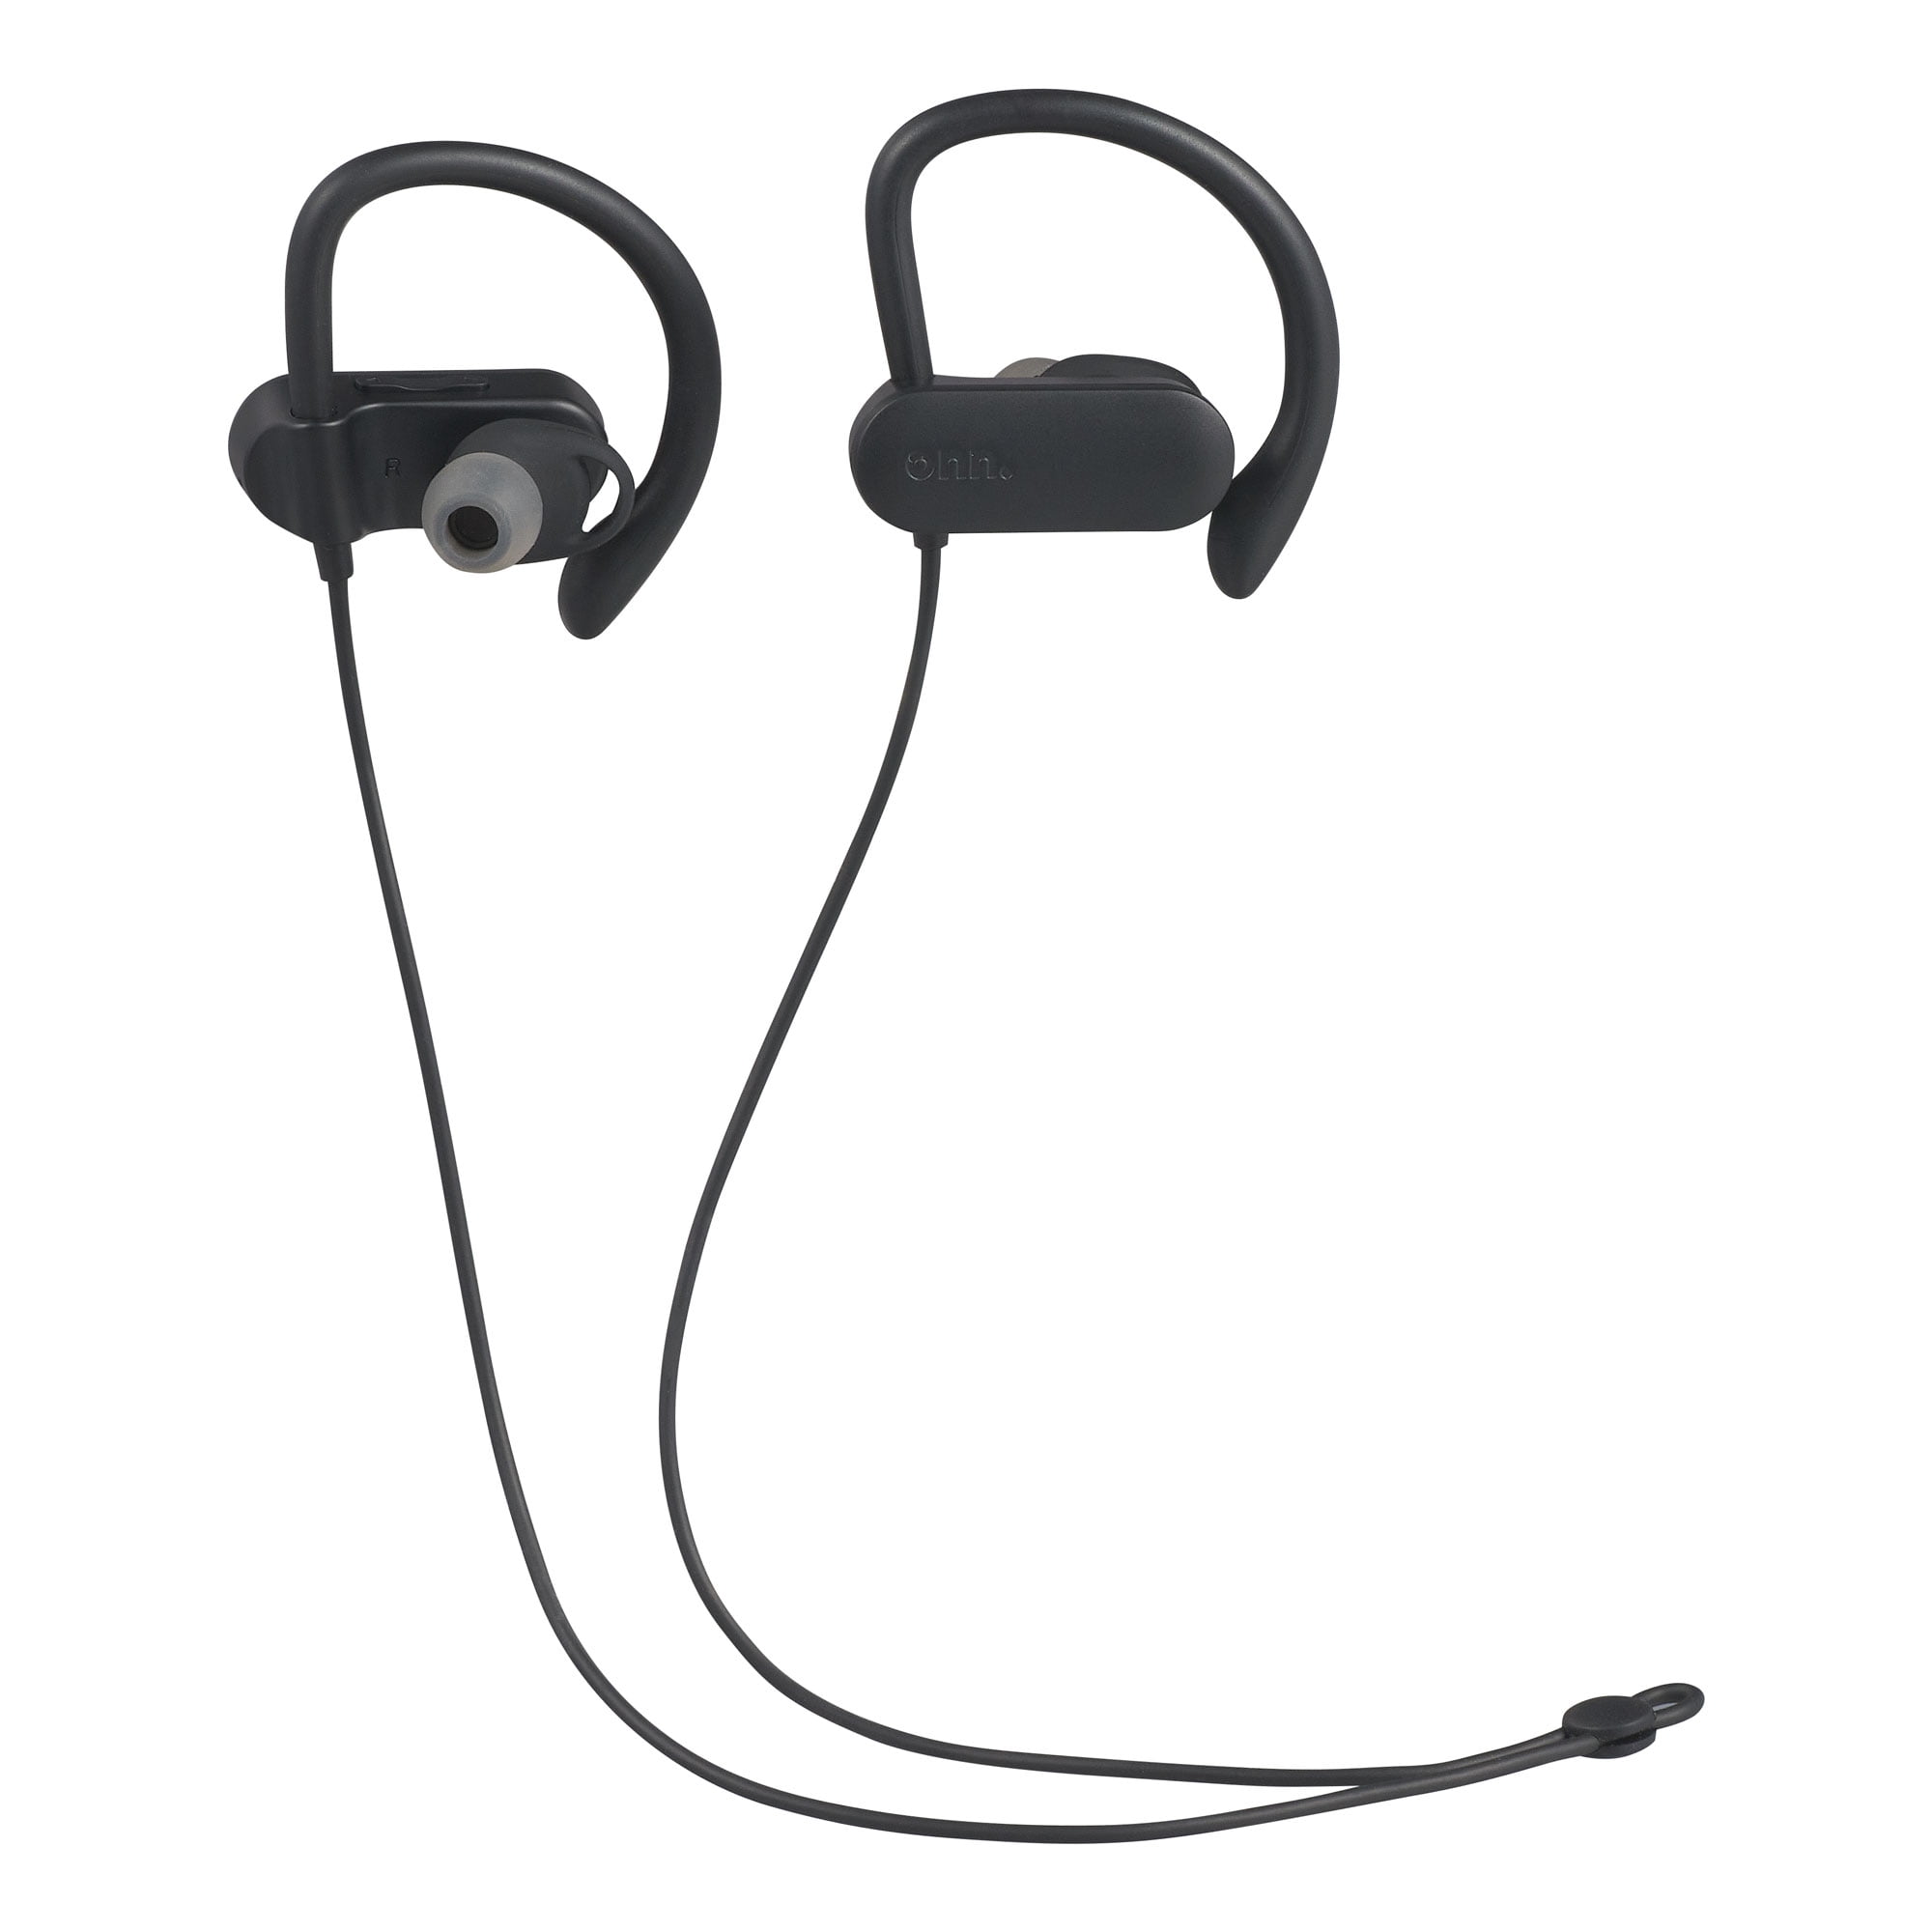 onn. Earphones Bluetooth In-Ear Headphones, Black - Walmart.com